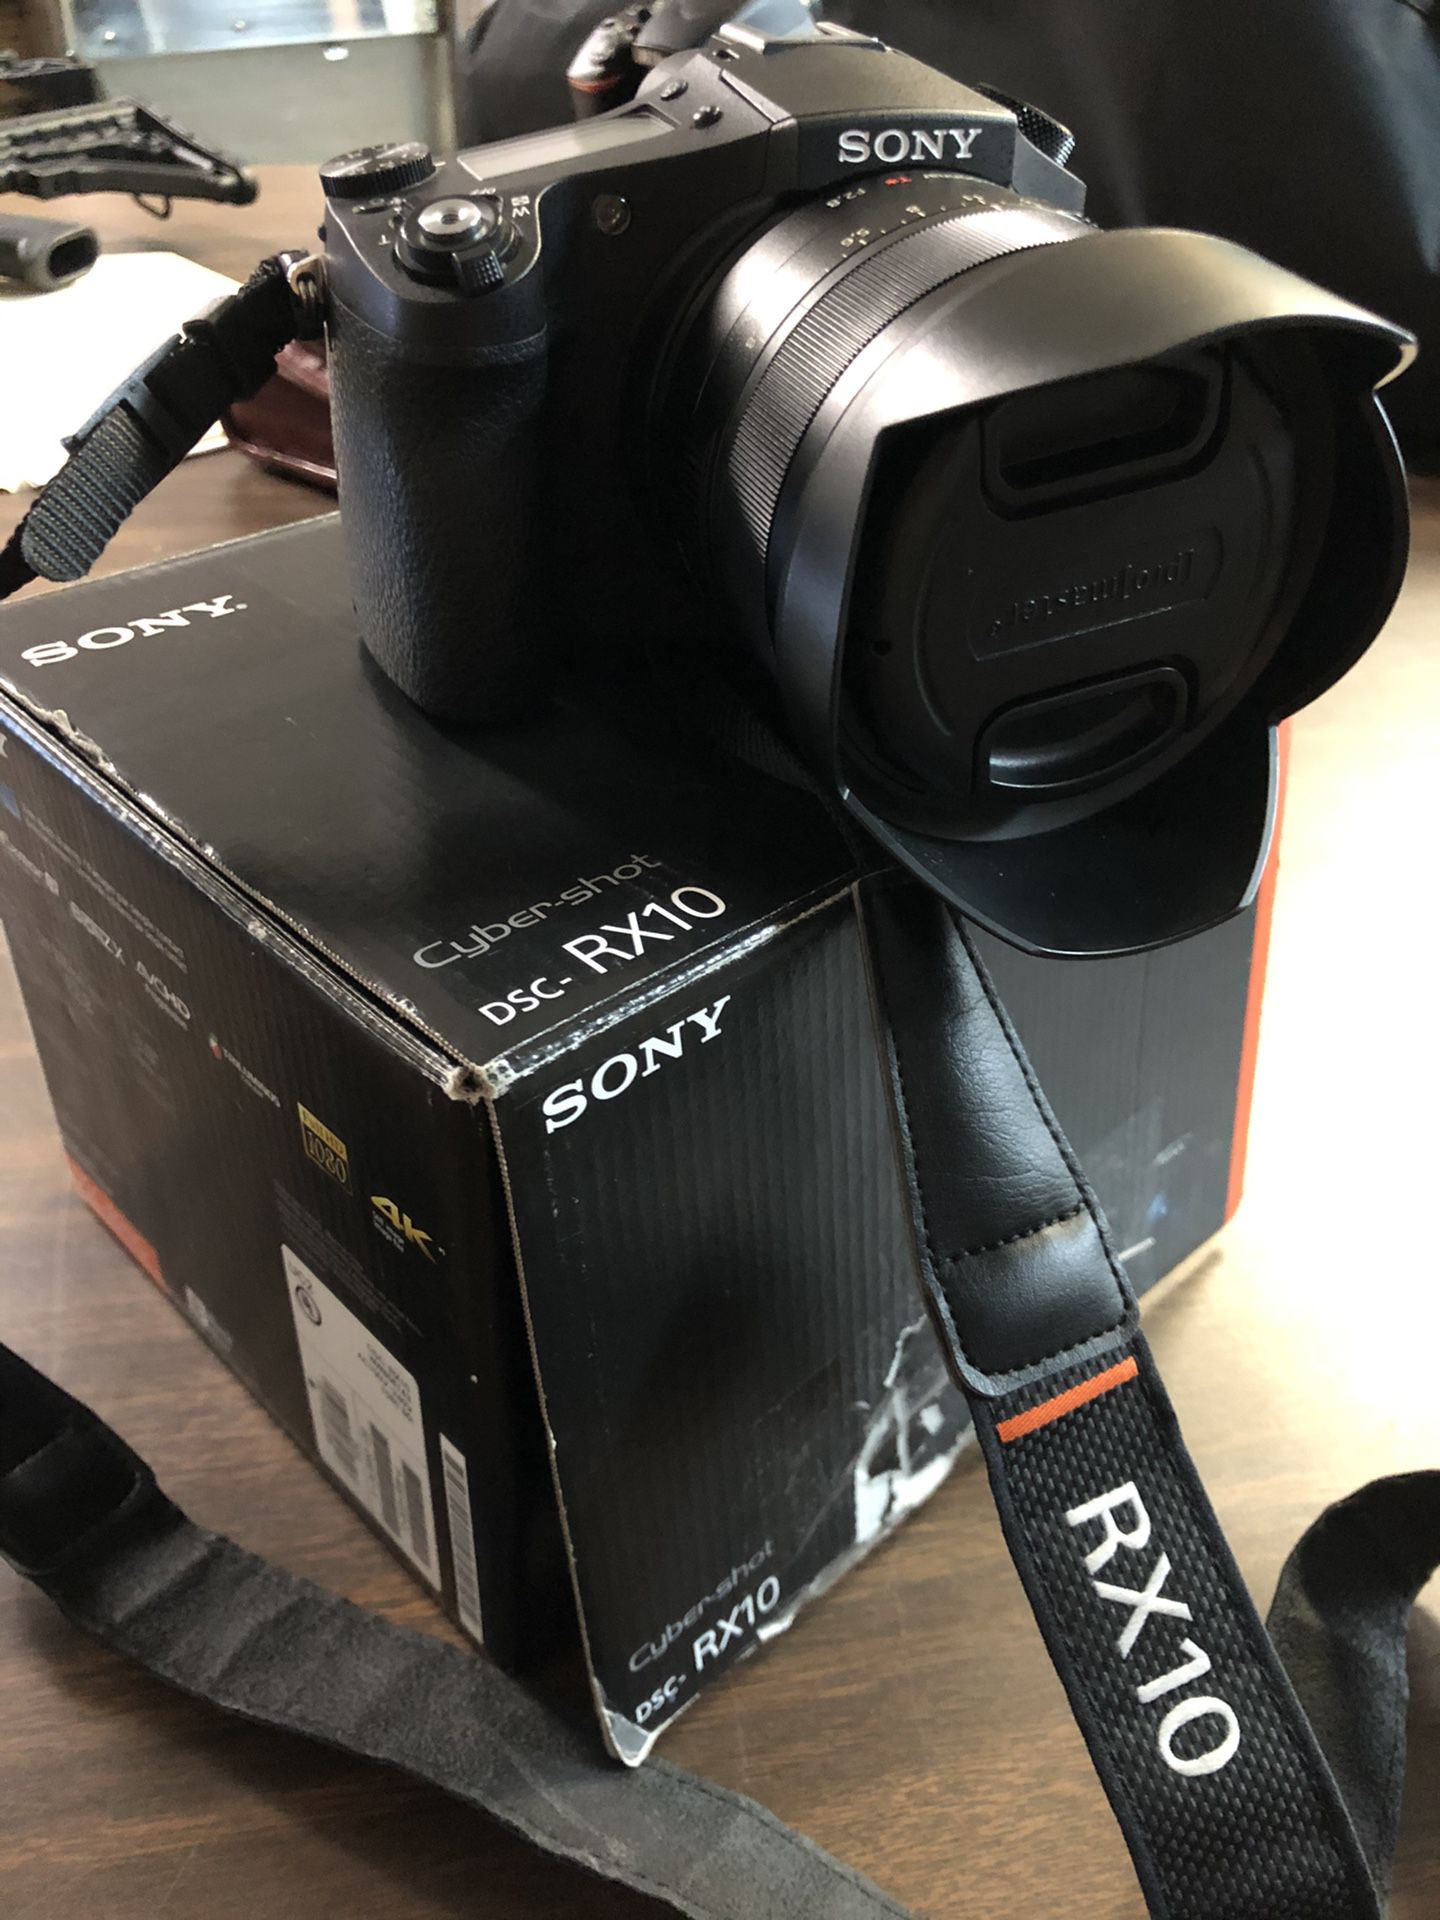 Sony dsc RX10 digital camera with lens